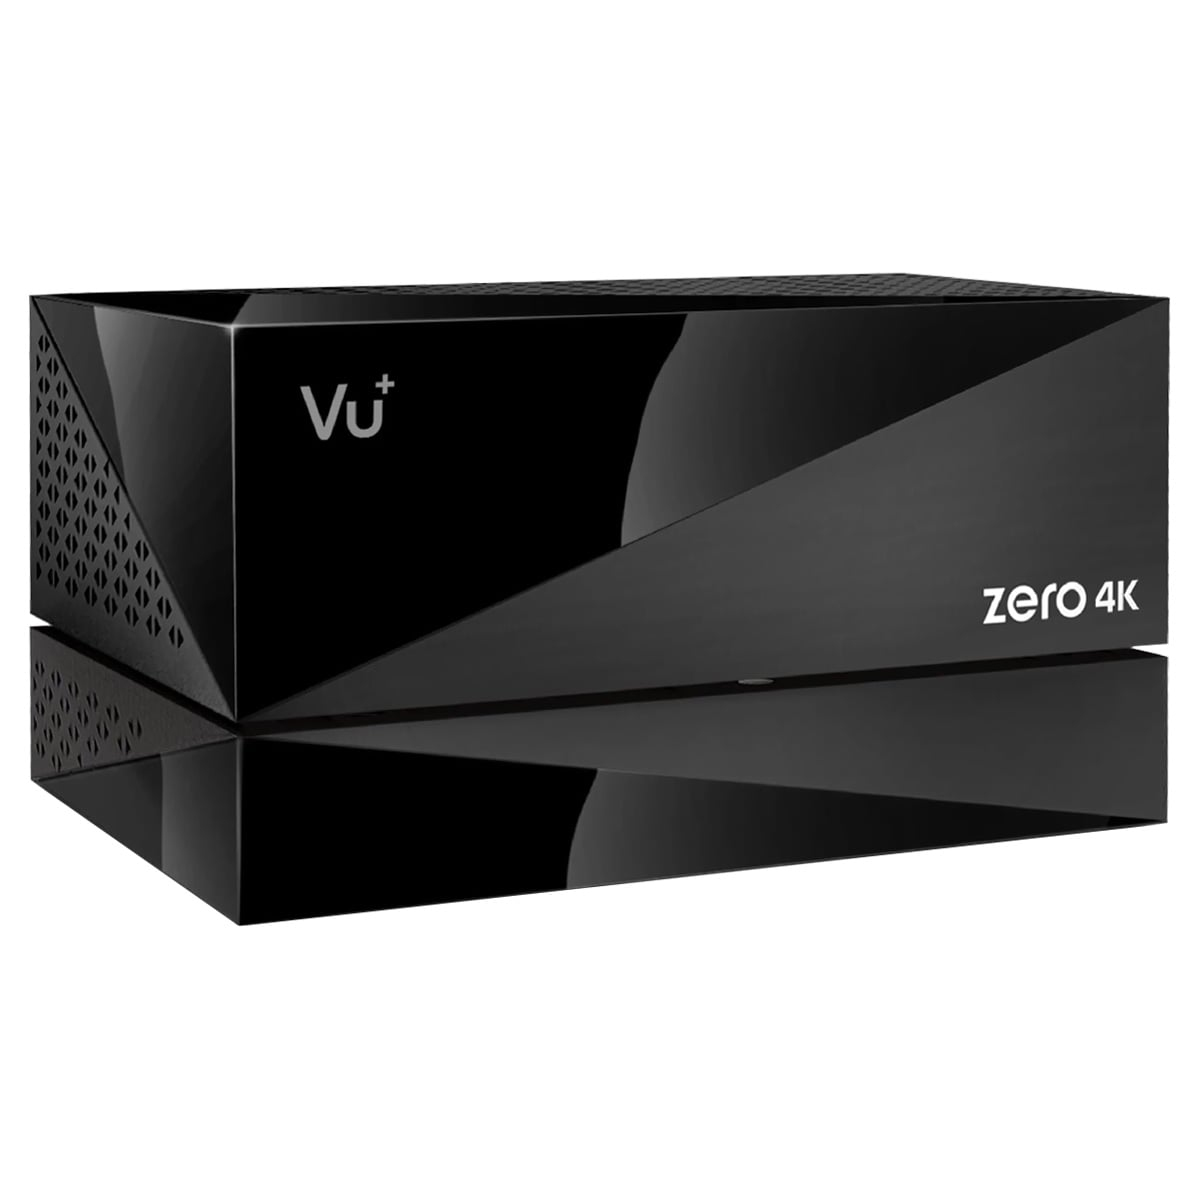 VU+ Zero 4K DVB-C/T2 (Schwarz) PVR-Kit Kabel 2TB 4K inkl. Receiver